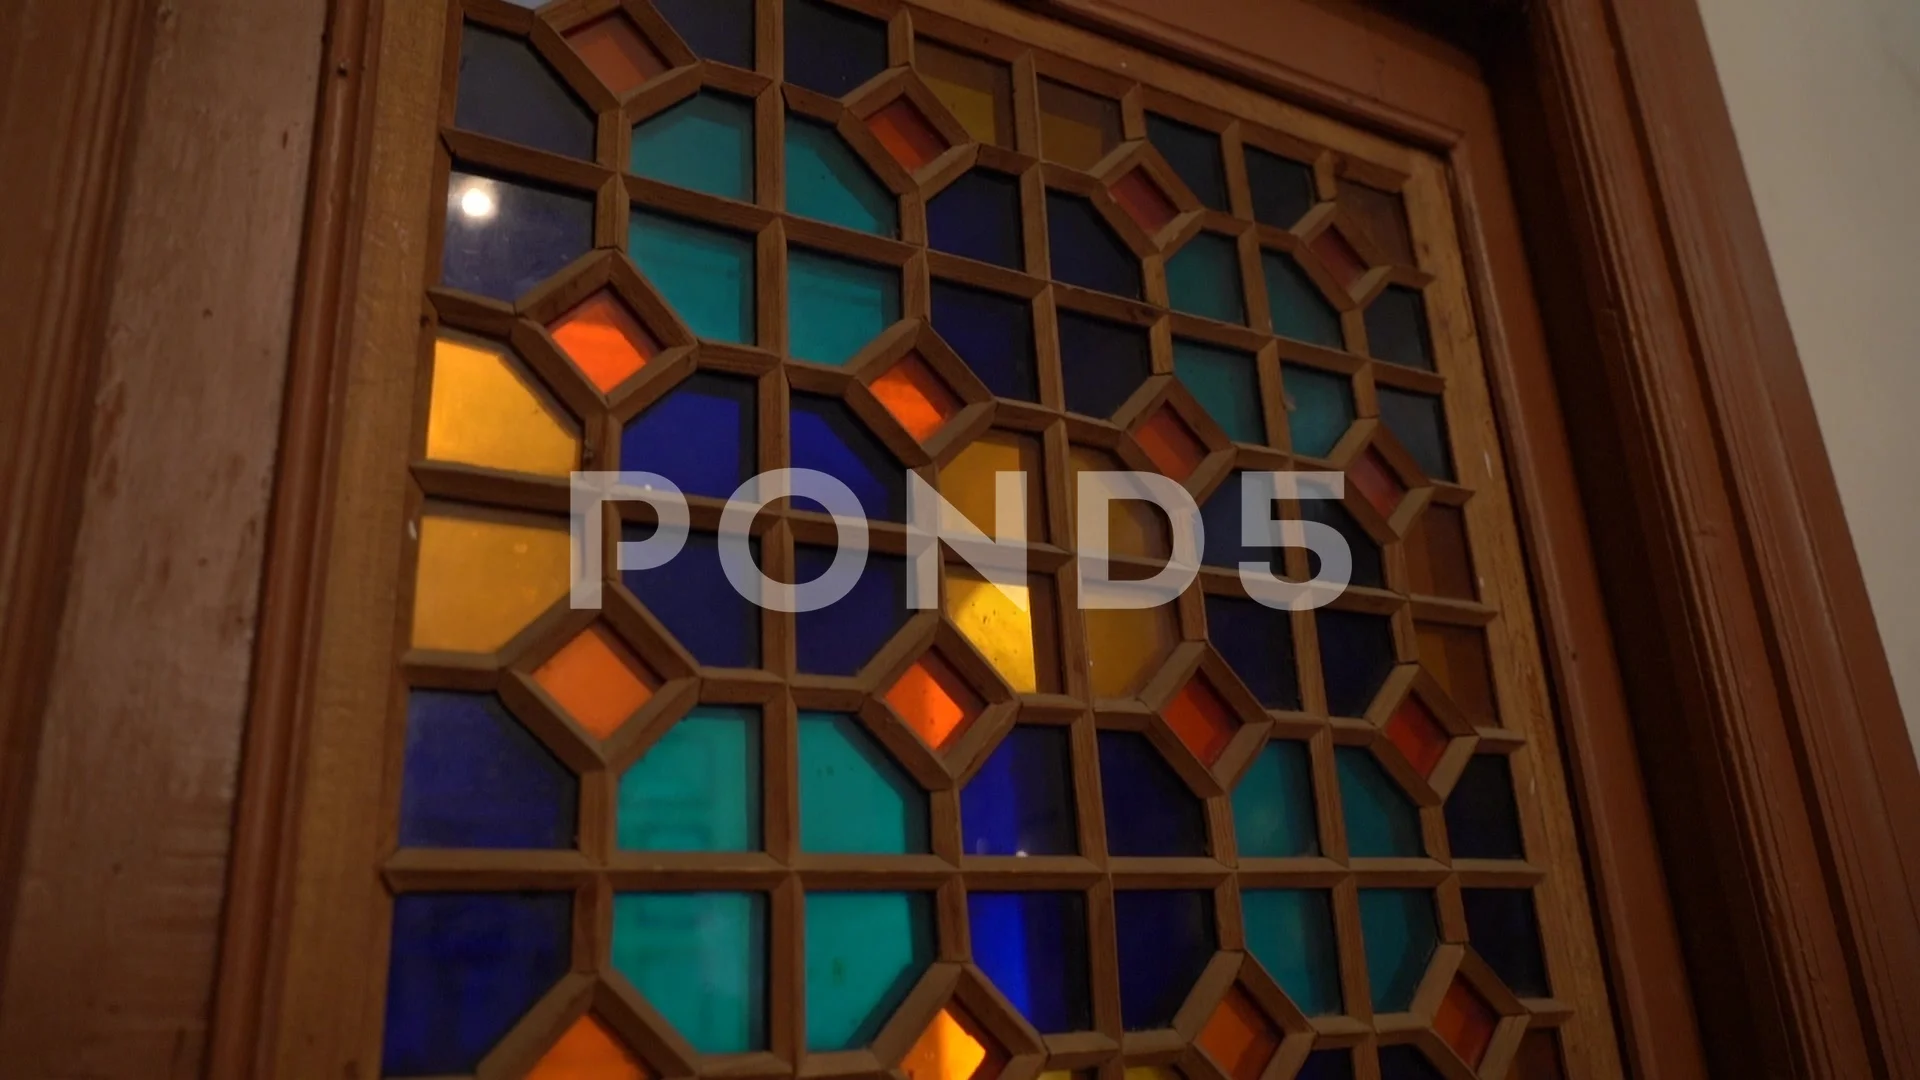 Mosaic window HD wallpapers